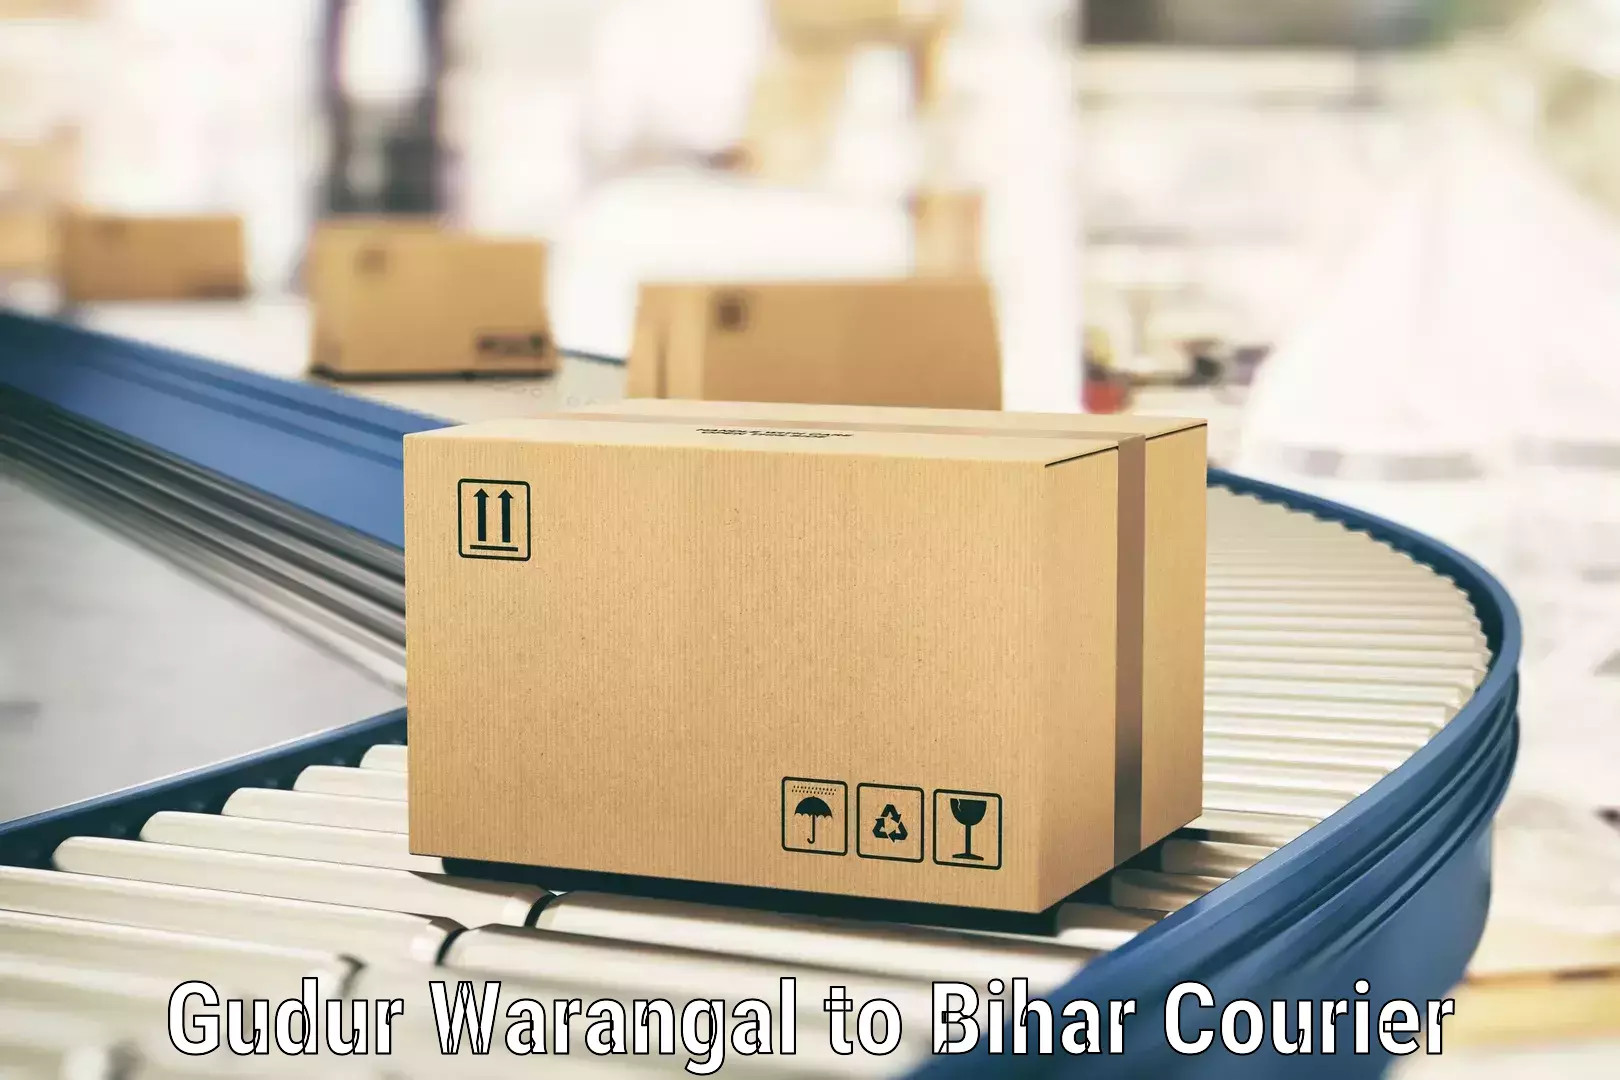 Urgent courier needs Gudur Warangal to Tekari